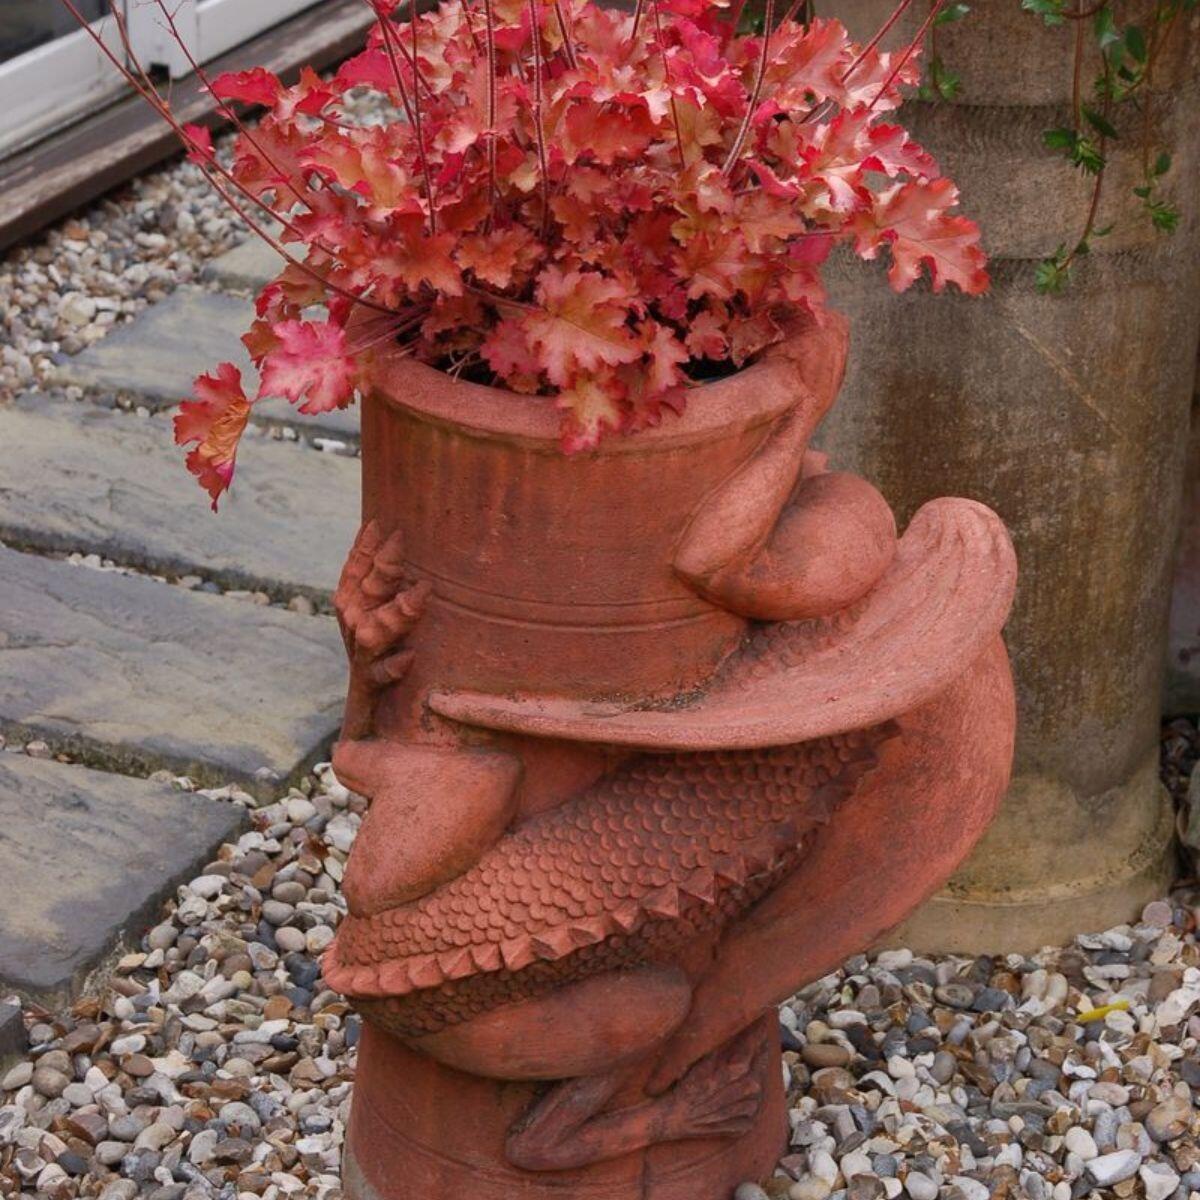 Chimney pot dragon garden planter